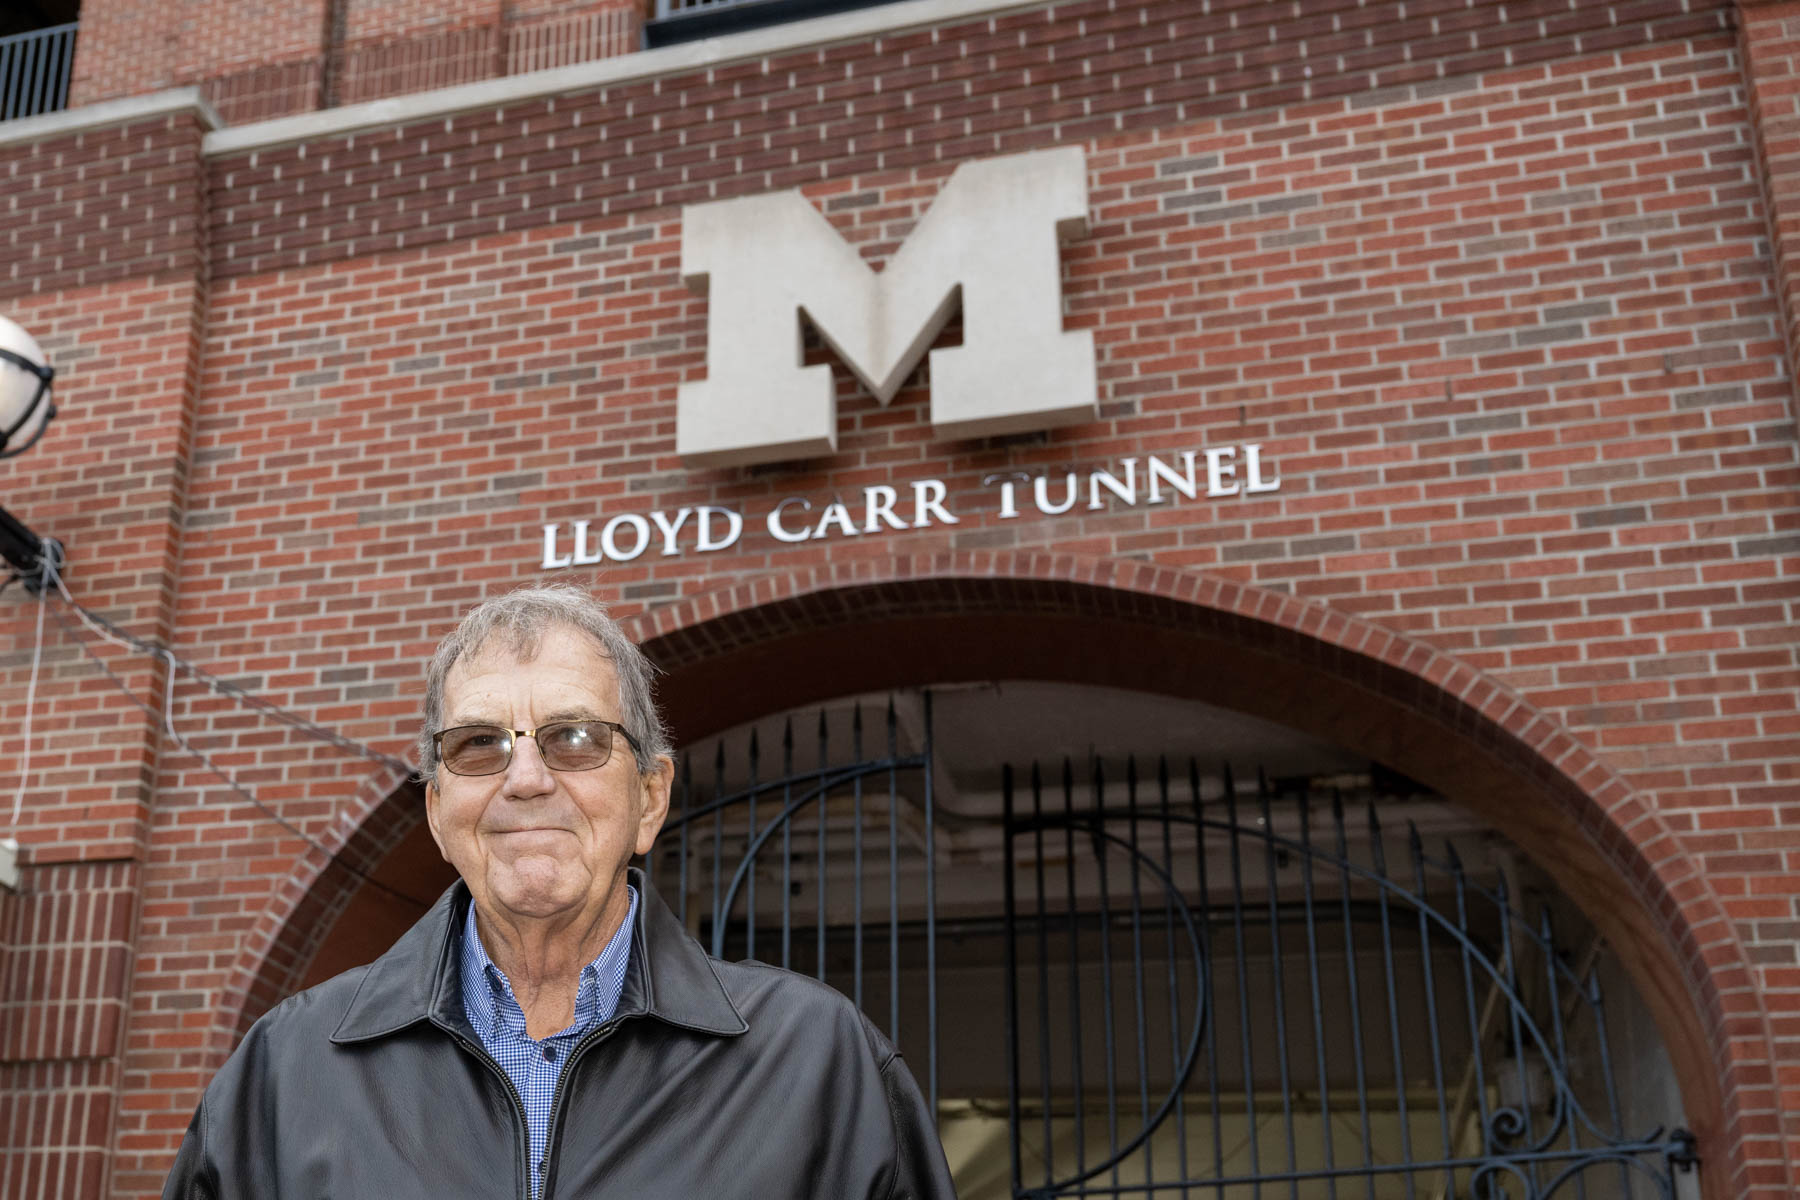 Michigan University renames stadium tunnel in honor of Lloyd Carr